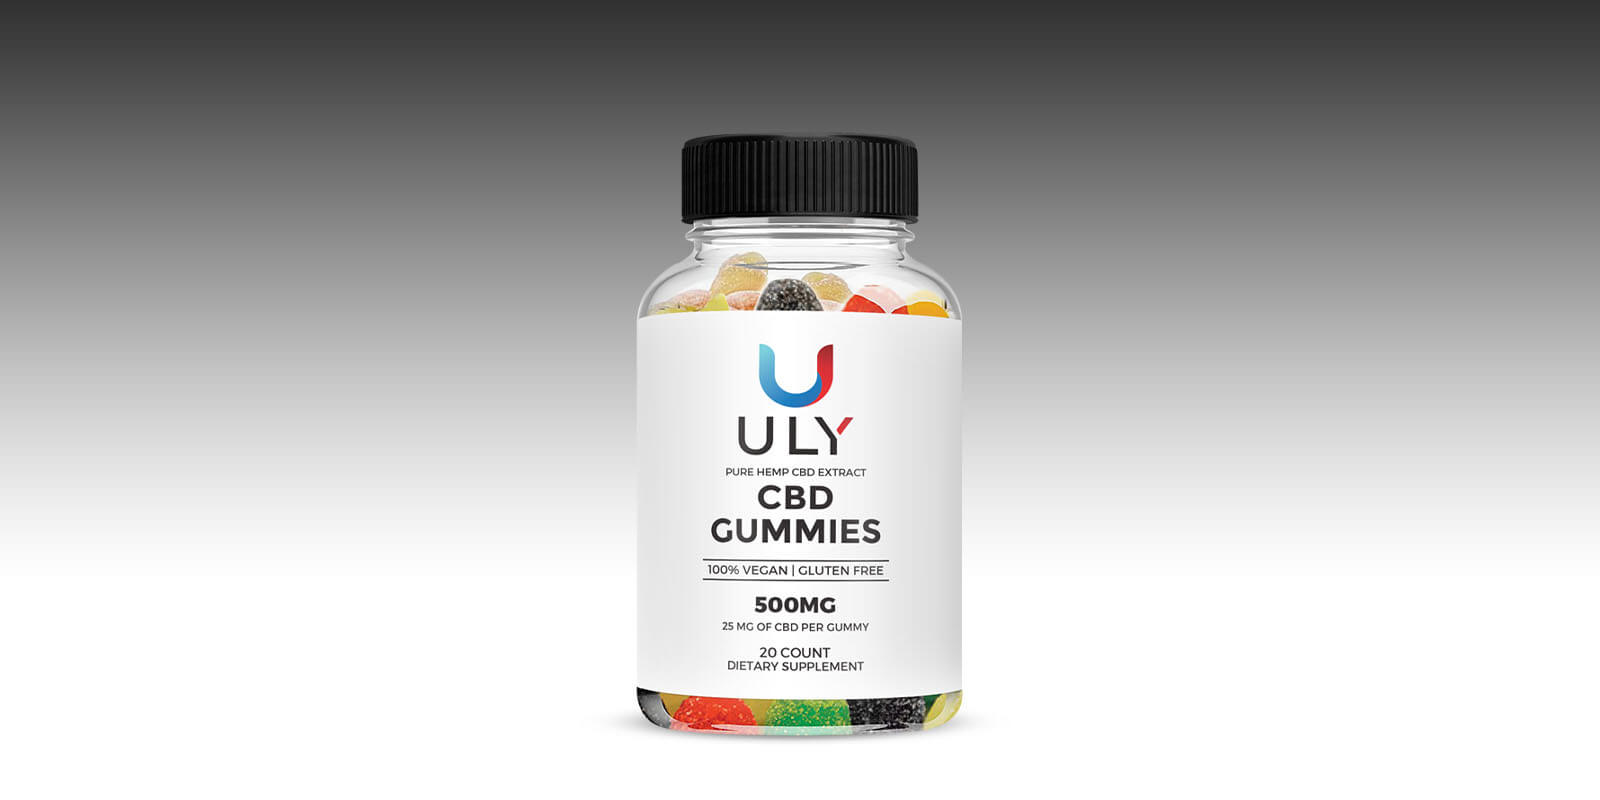 Uly CBD Gummies Reviews